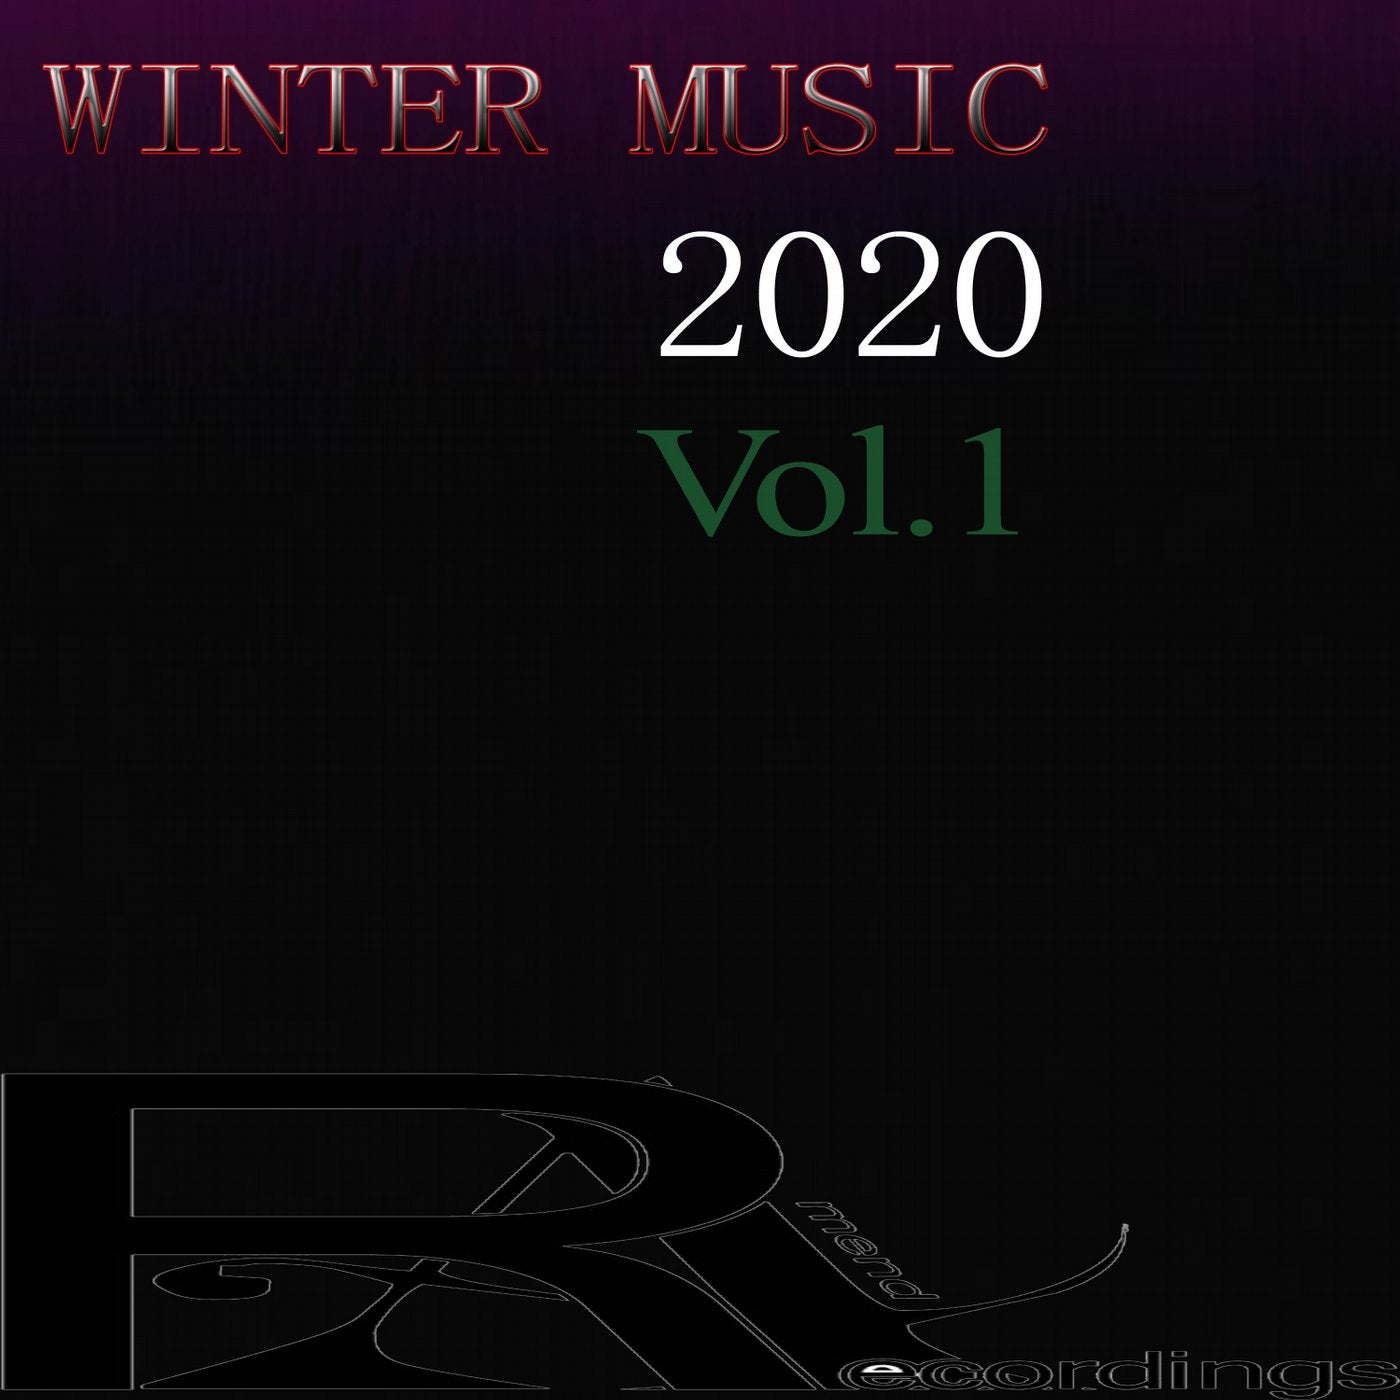 WINTER MUSIC 2020, Vol.1